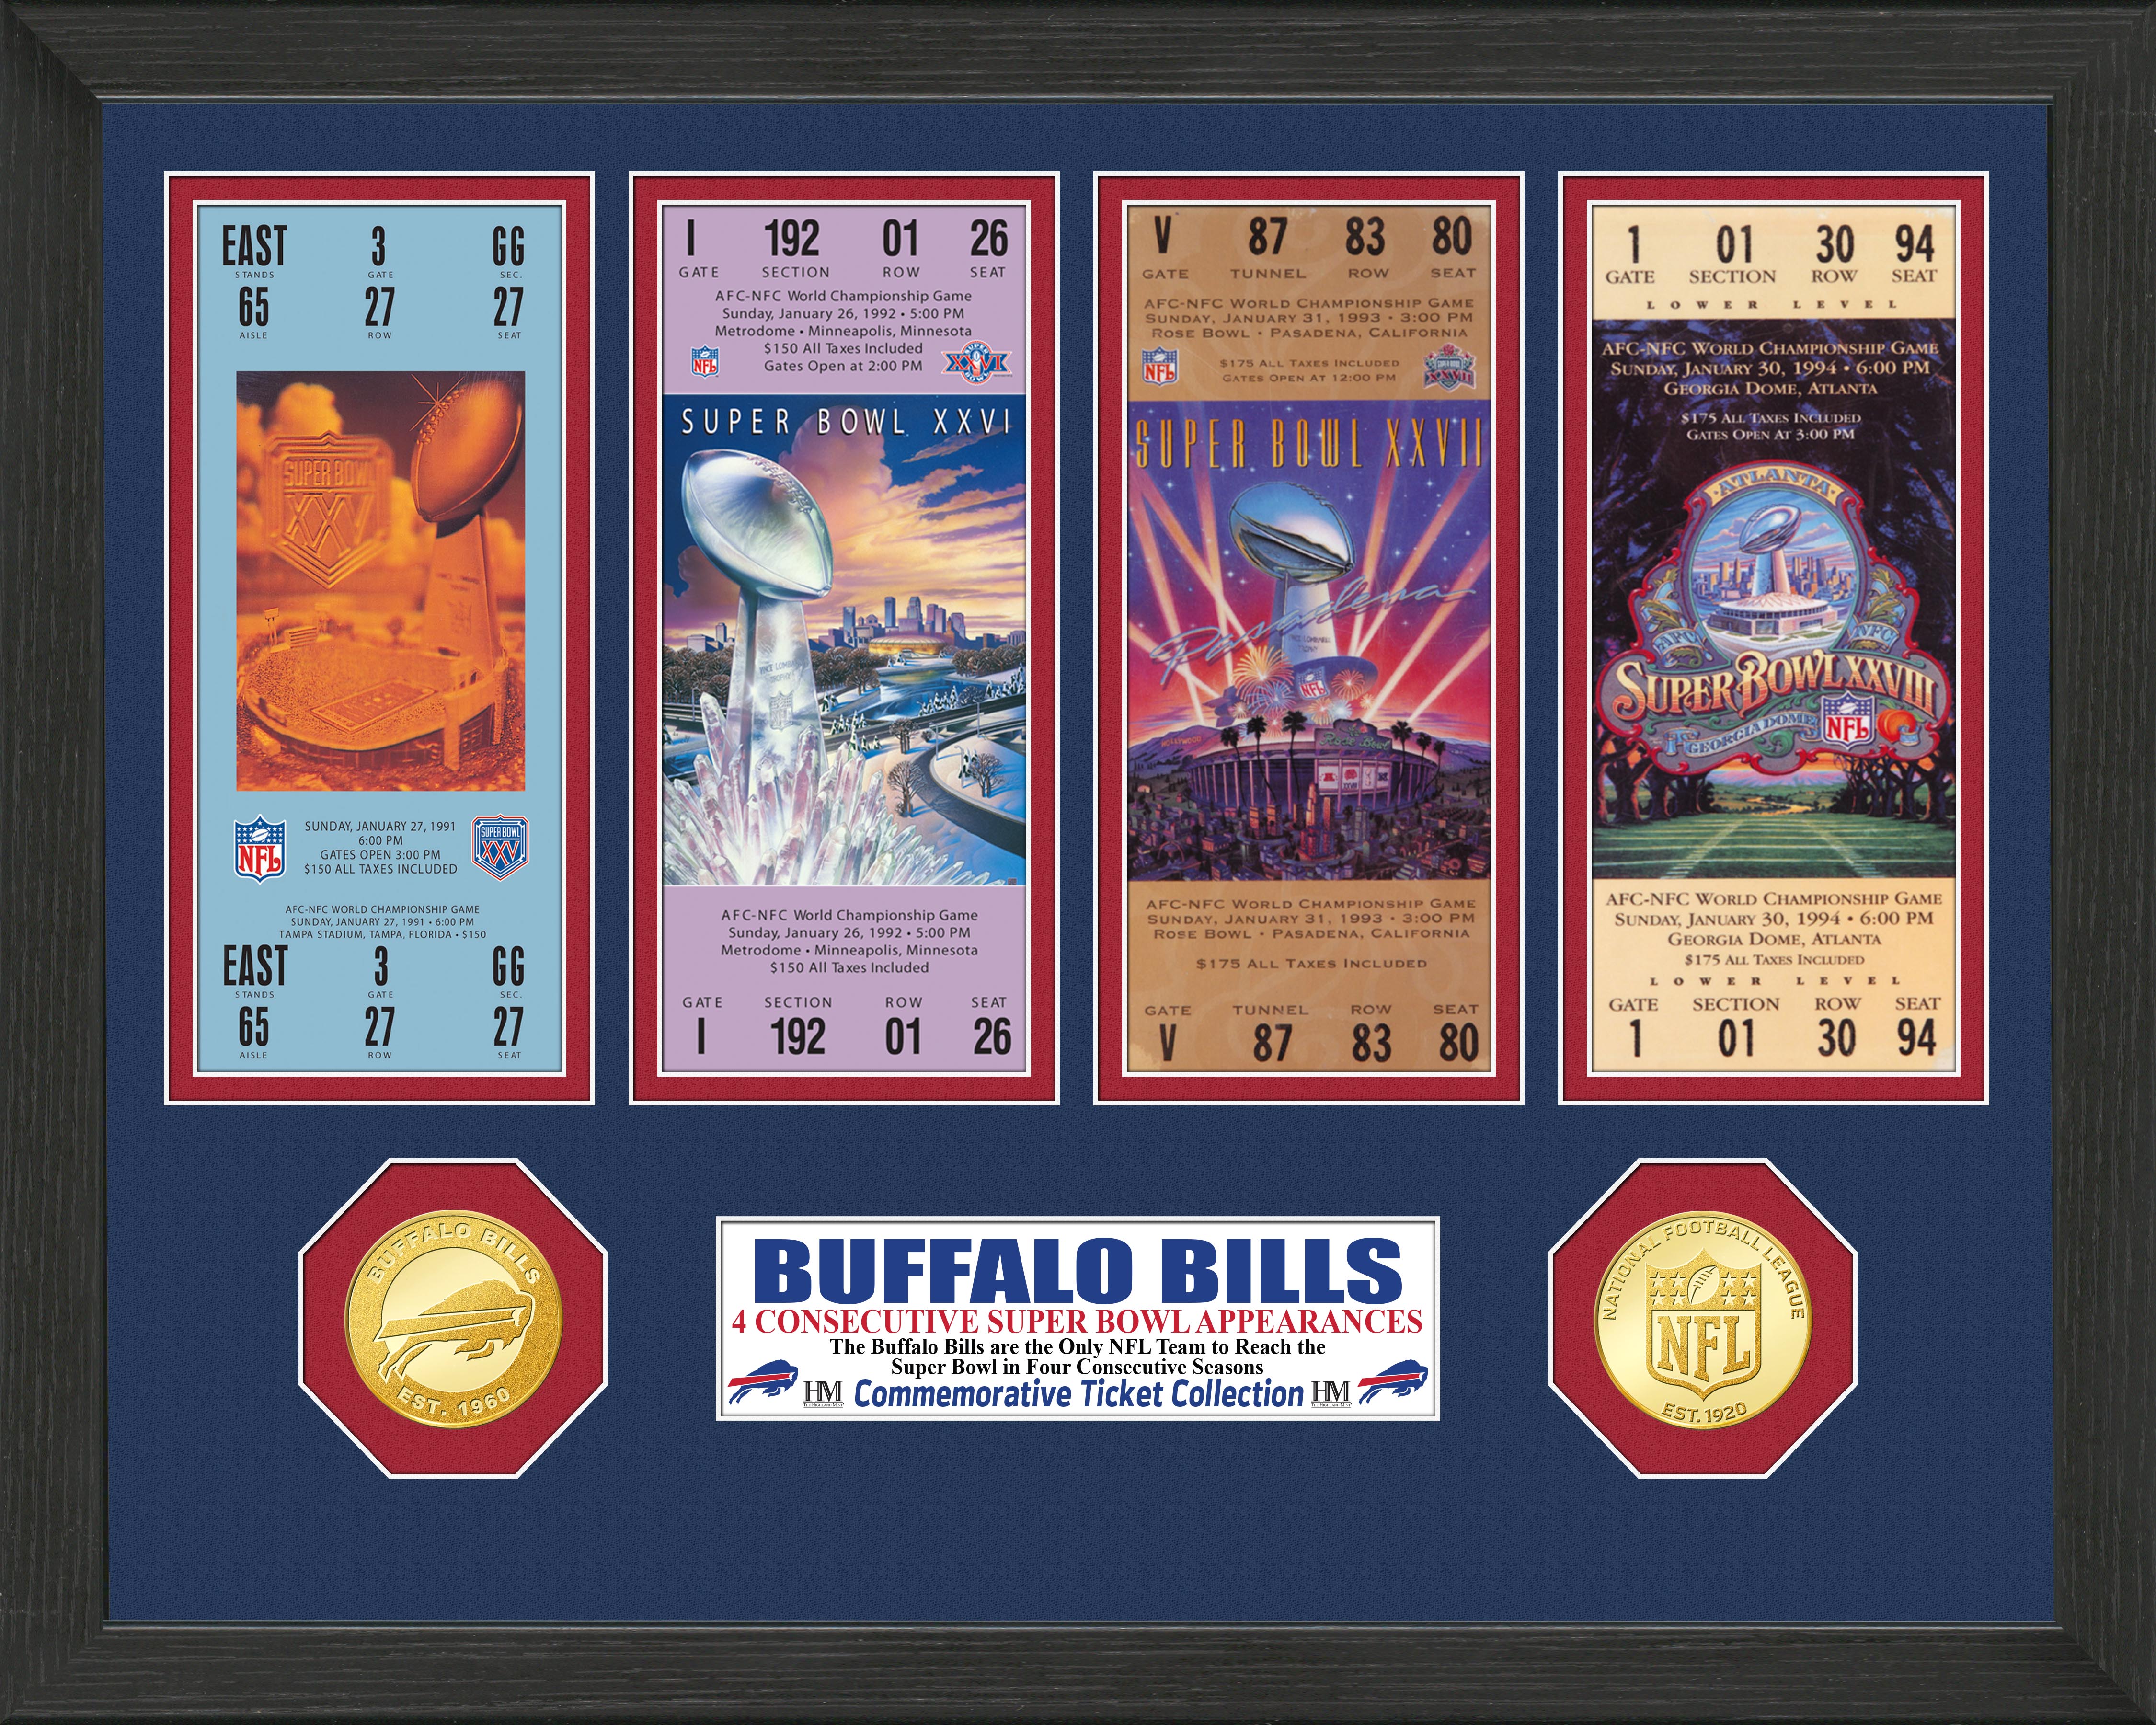 Buffalo Bills 4 Consecutive Super Bowl Appearances Ticket Collection